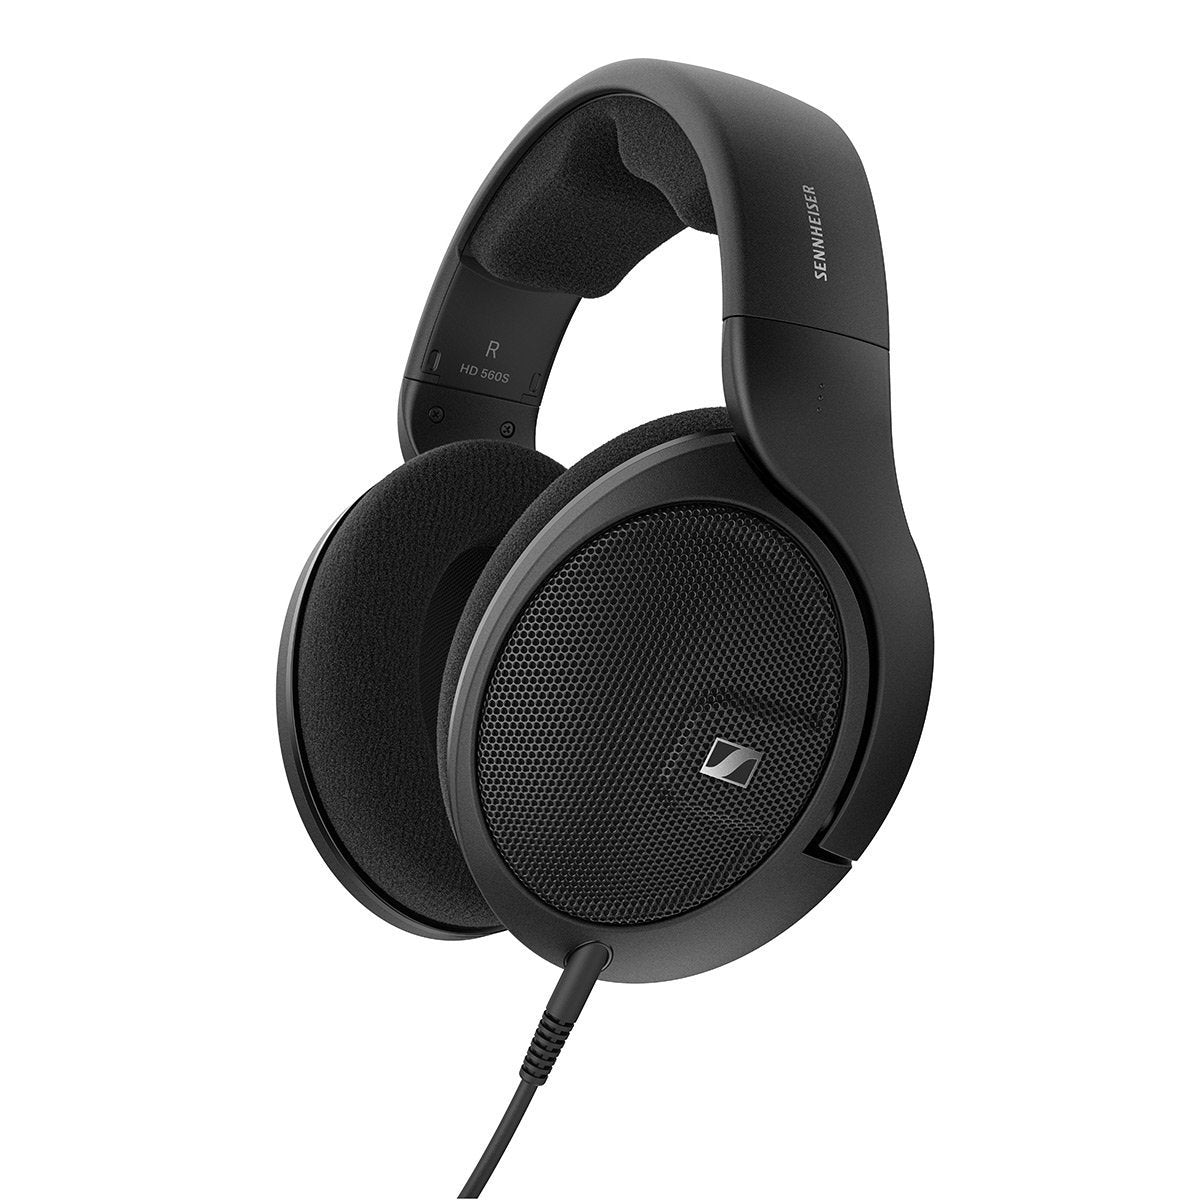 Sennheiser HD 560 S Cabled Headphones - Black